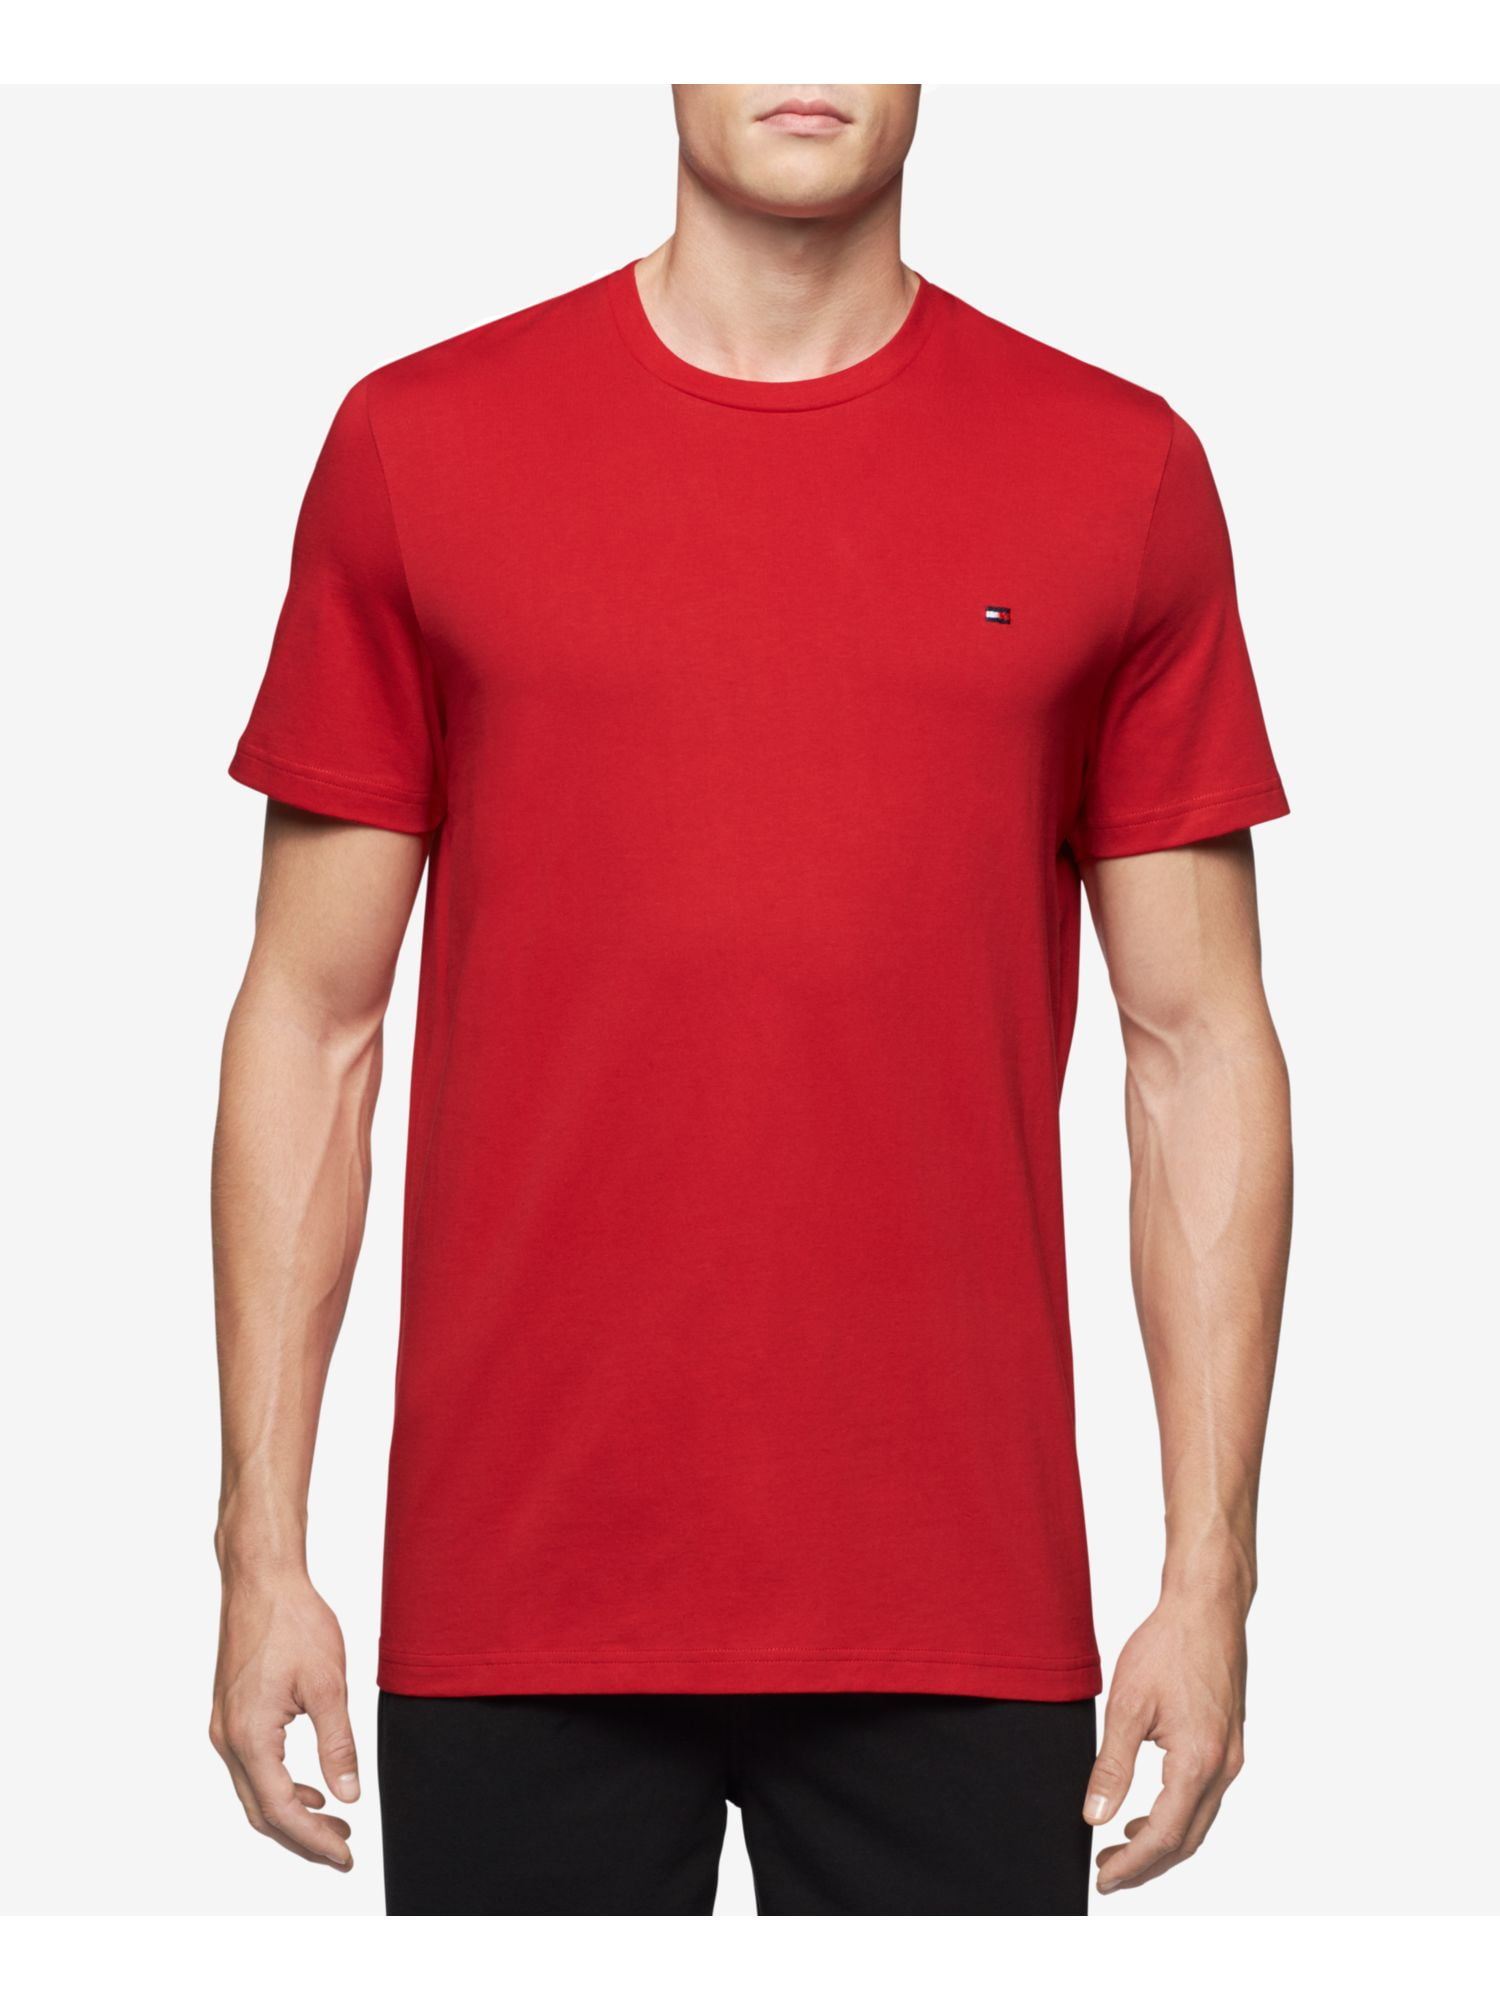 M Fit Red Classic TOMMY HILFIGER T-Shirt Lightweight, Mens